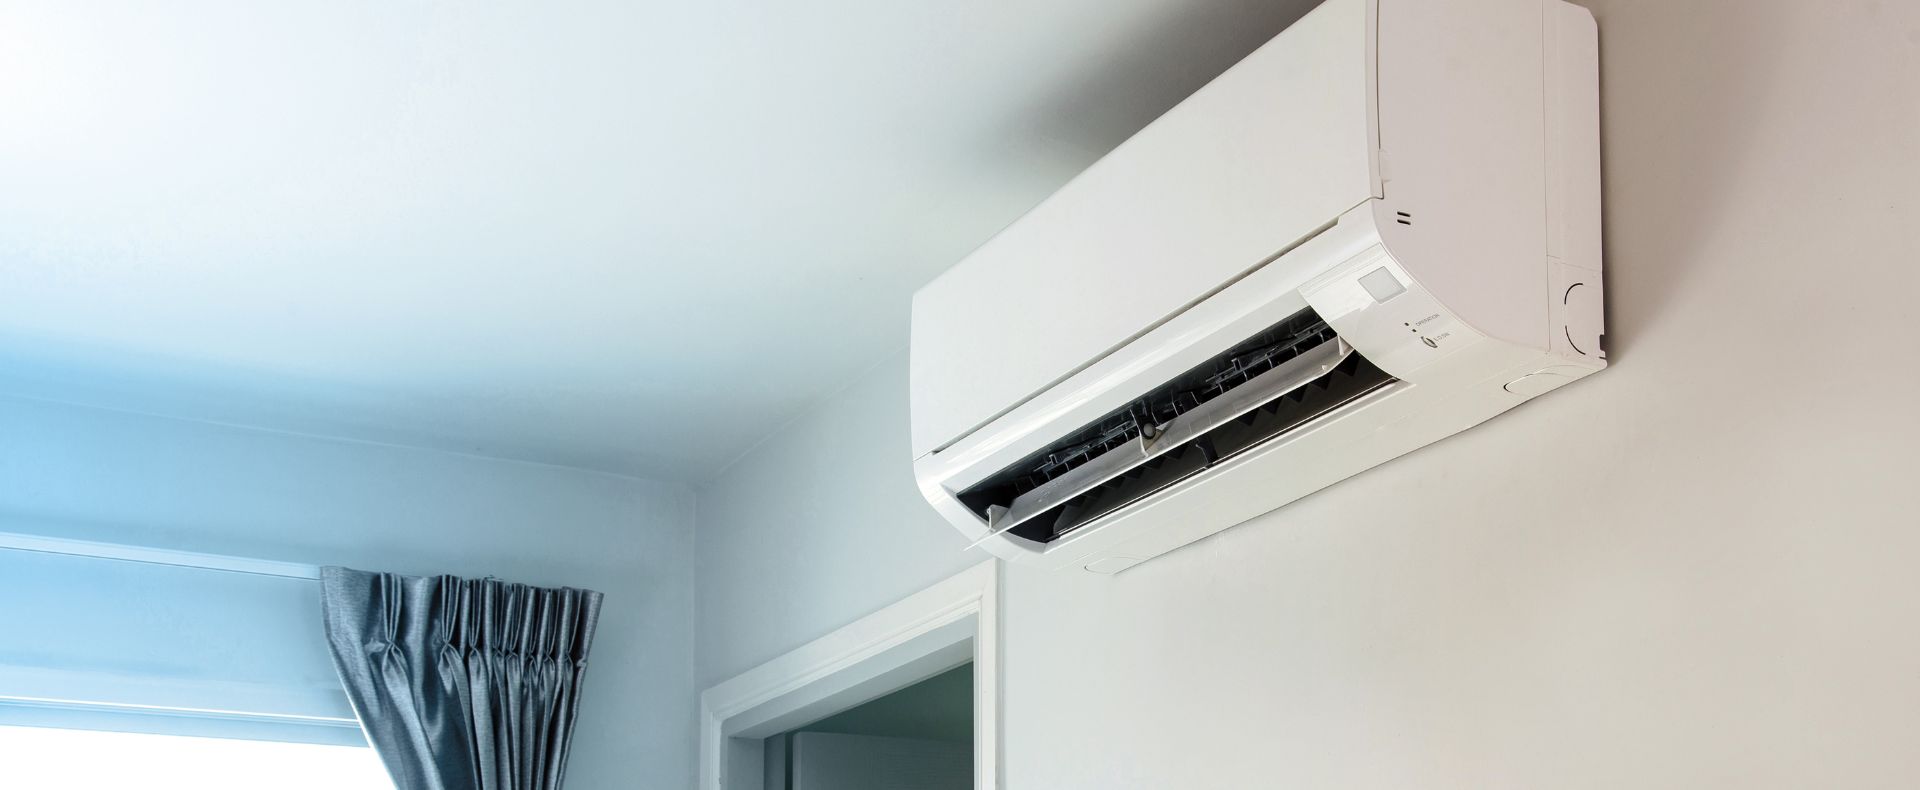 Lemaire | chauffage et sanitaire - slider climatisation